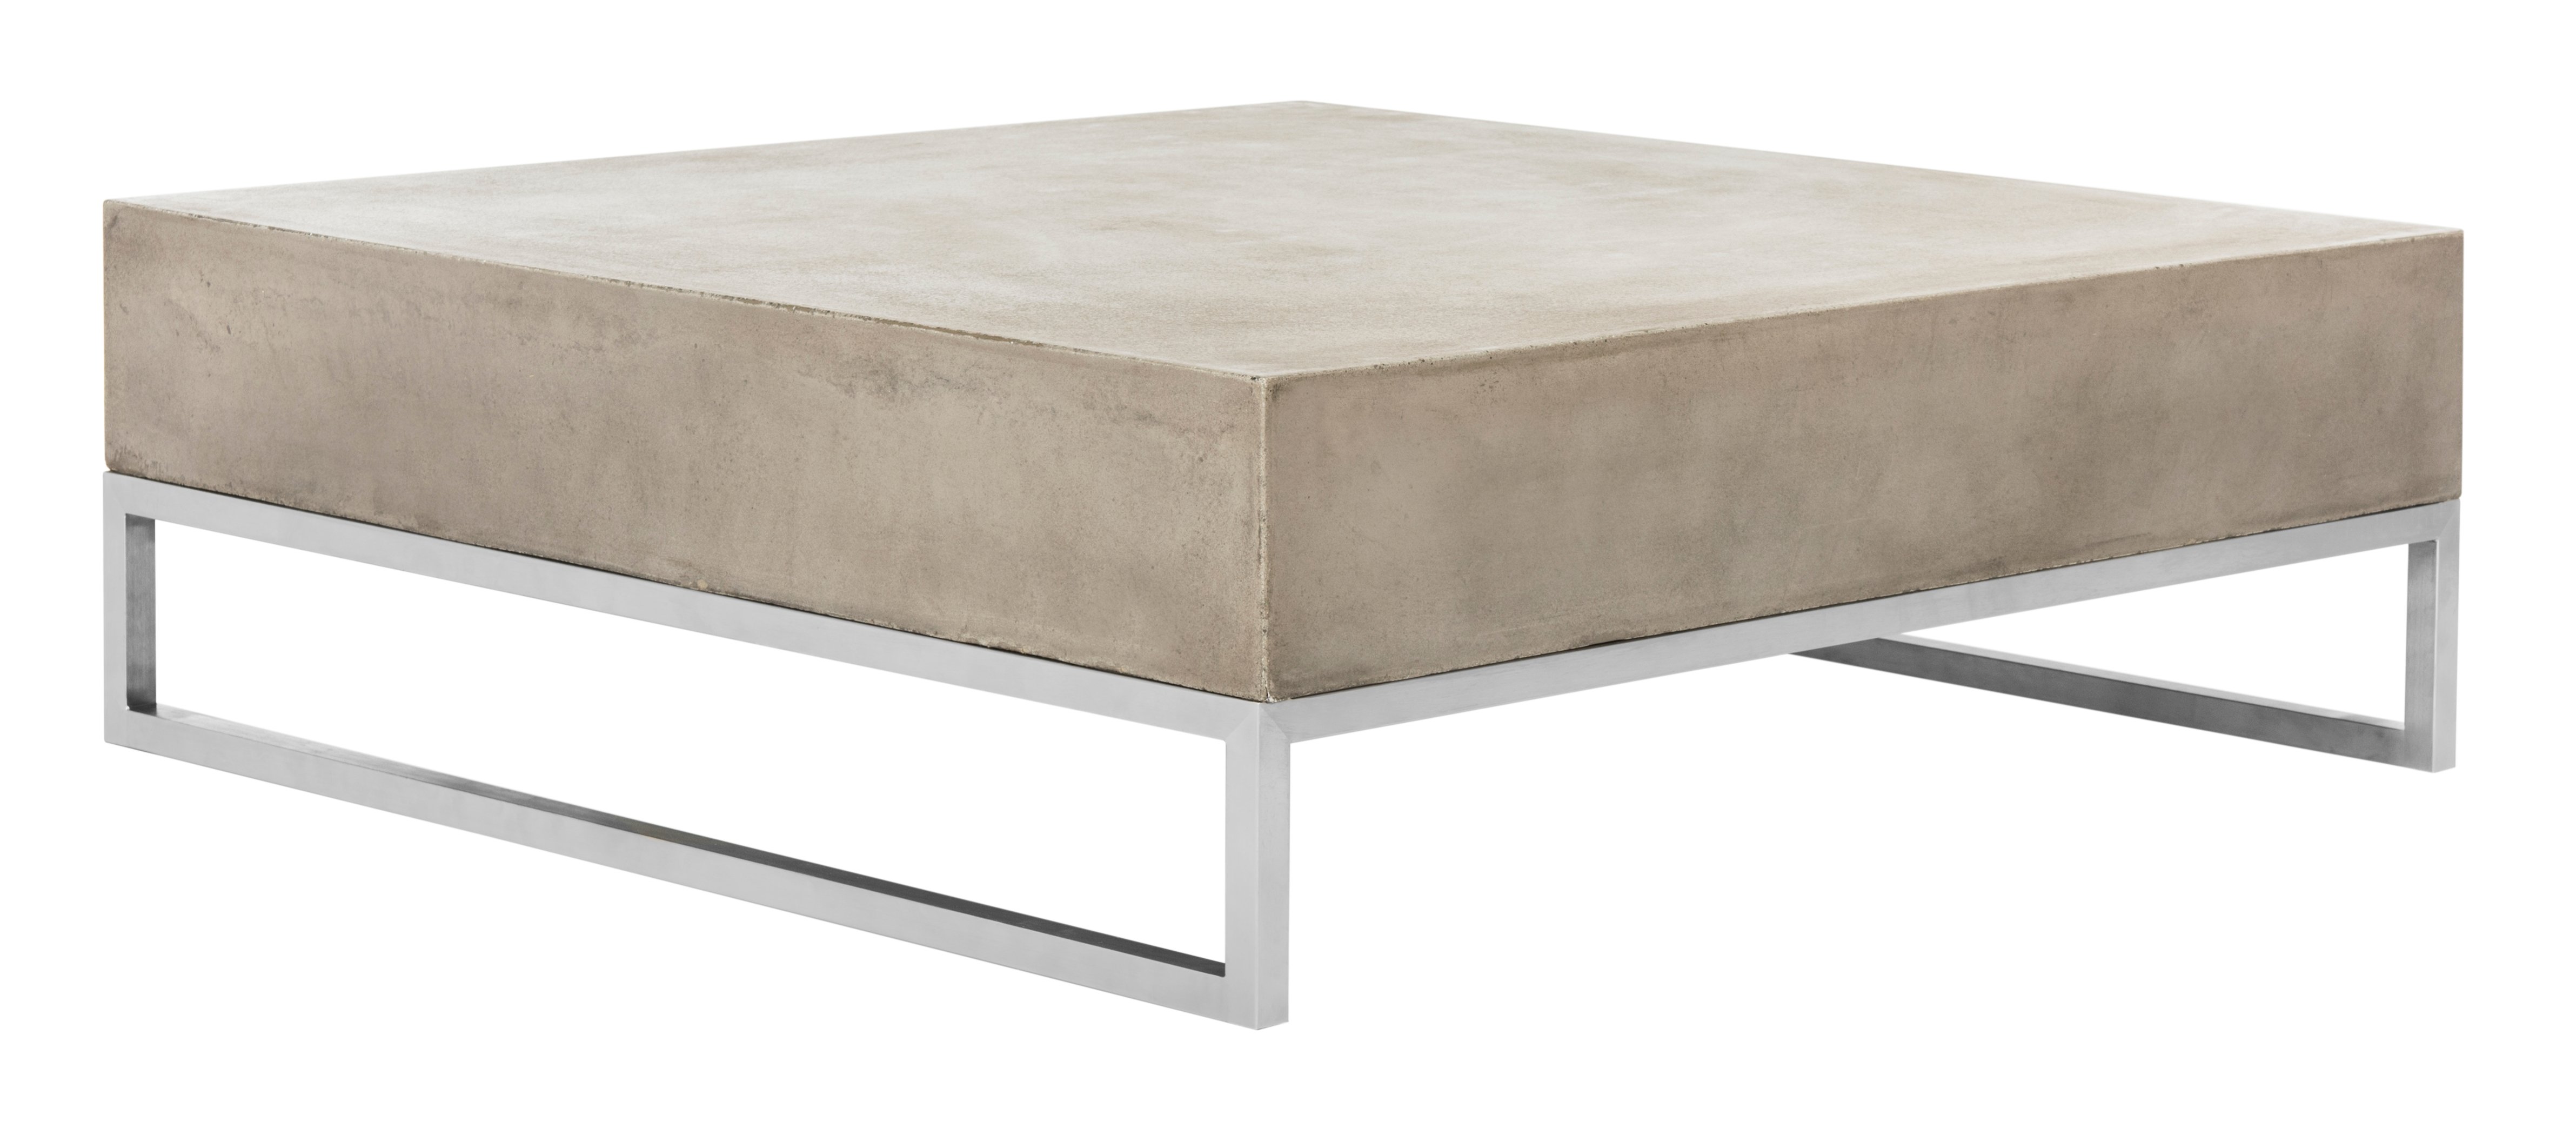 Eartha Indoor/Outdoor Mod Concrete Coffee Table - Image 1